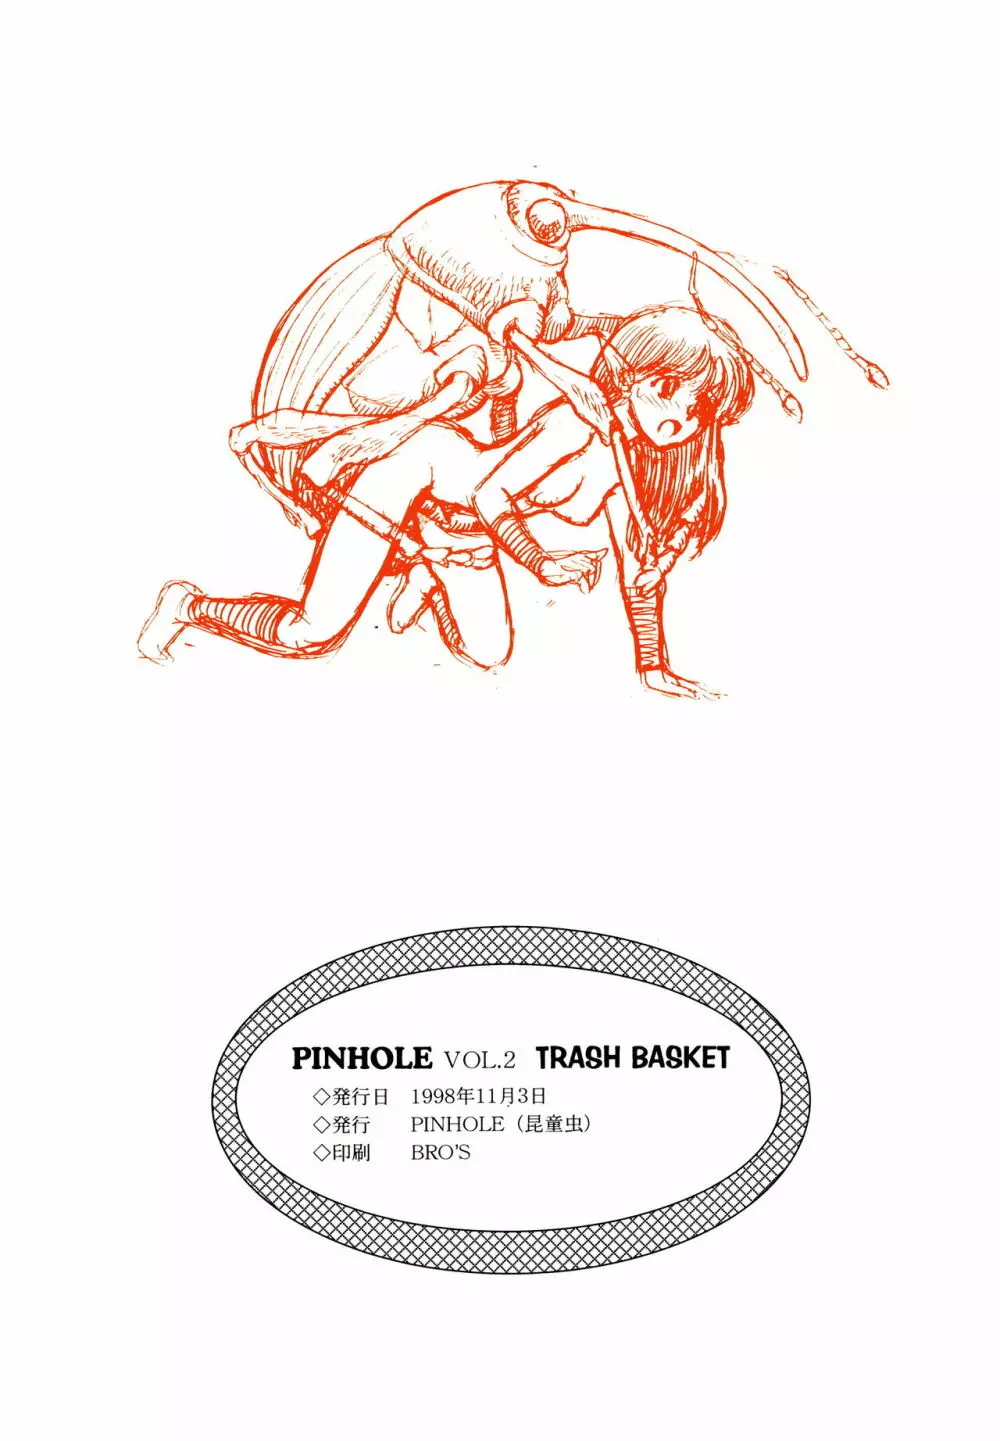 Pinhole Vol.2 TRASH BASKET ボンデージ・フェアリーズ ラフスケッチ集 26ページ